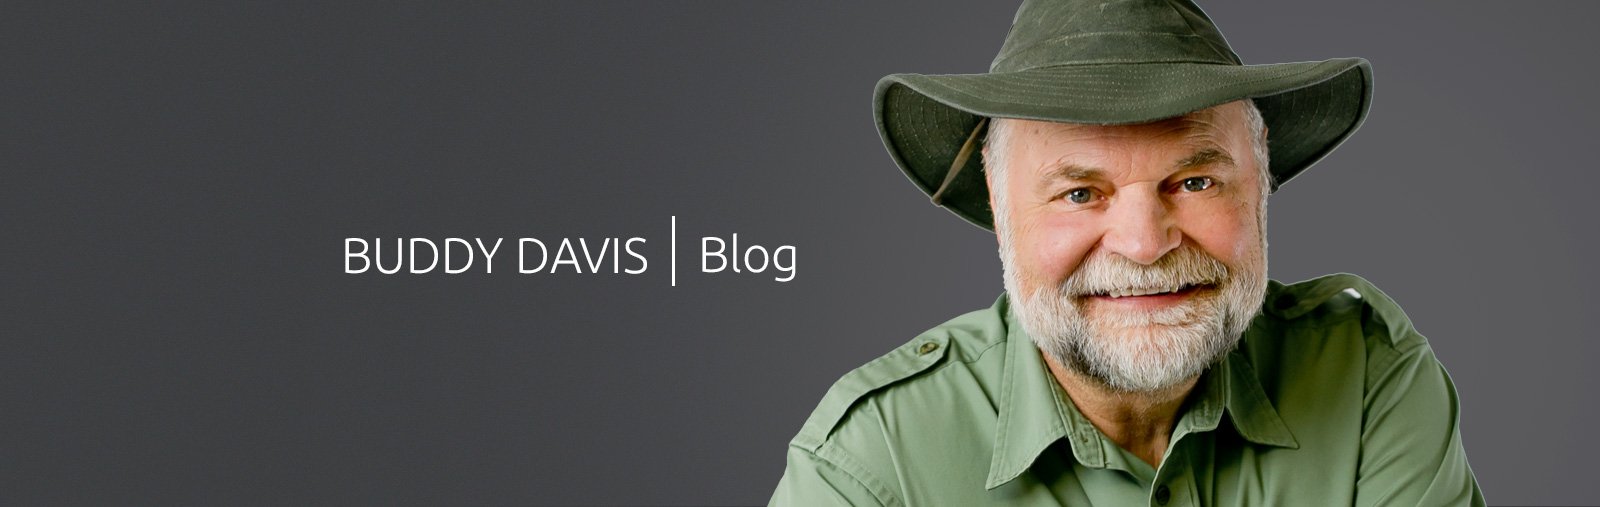 Buddy Davis Blog